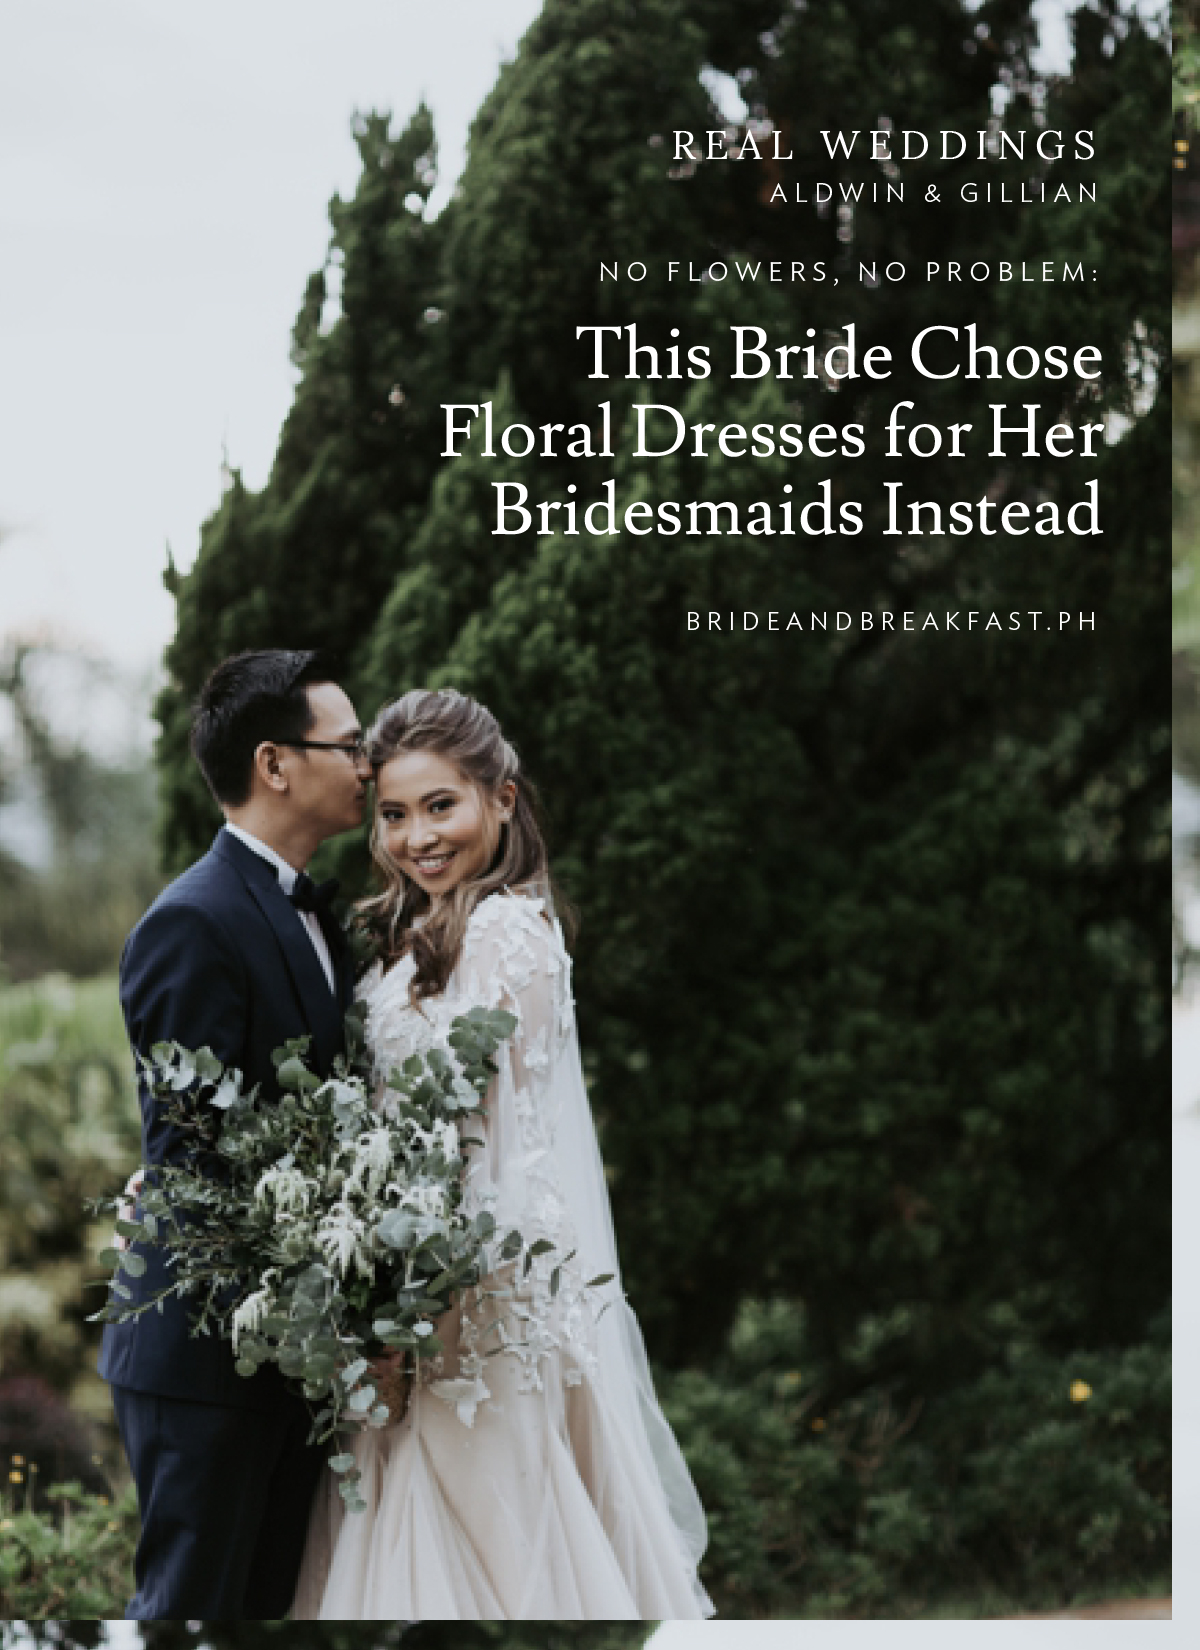 No Flowers, No Problem: This Bride Chose Floral Dresses for Her Bridesmaids Instead